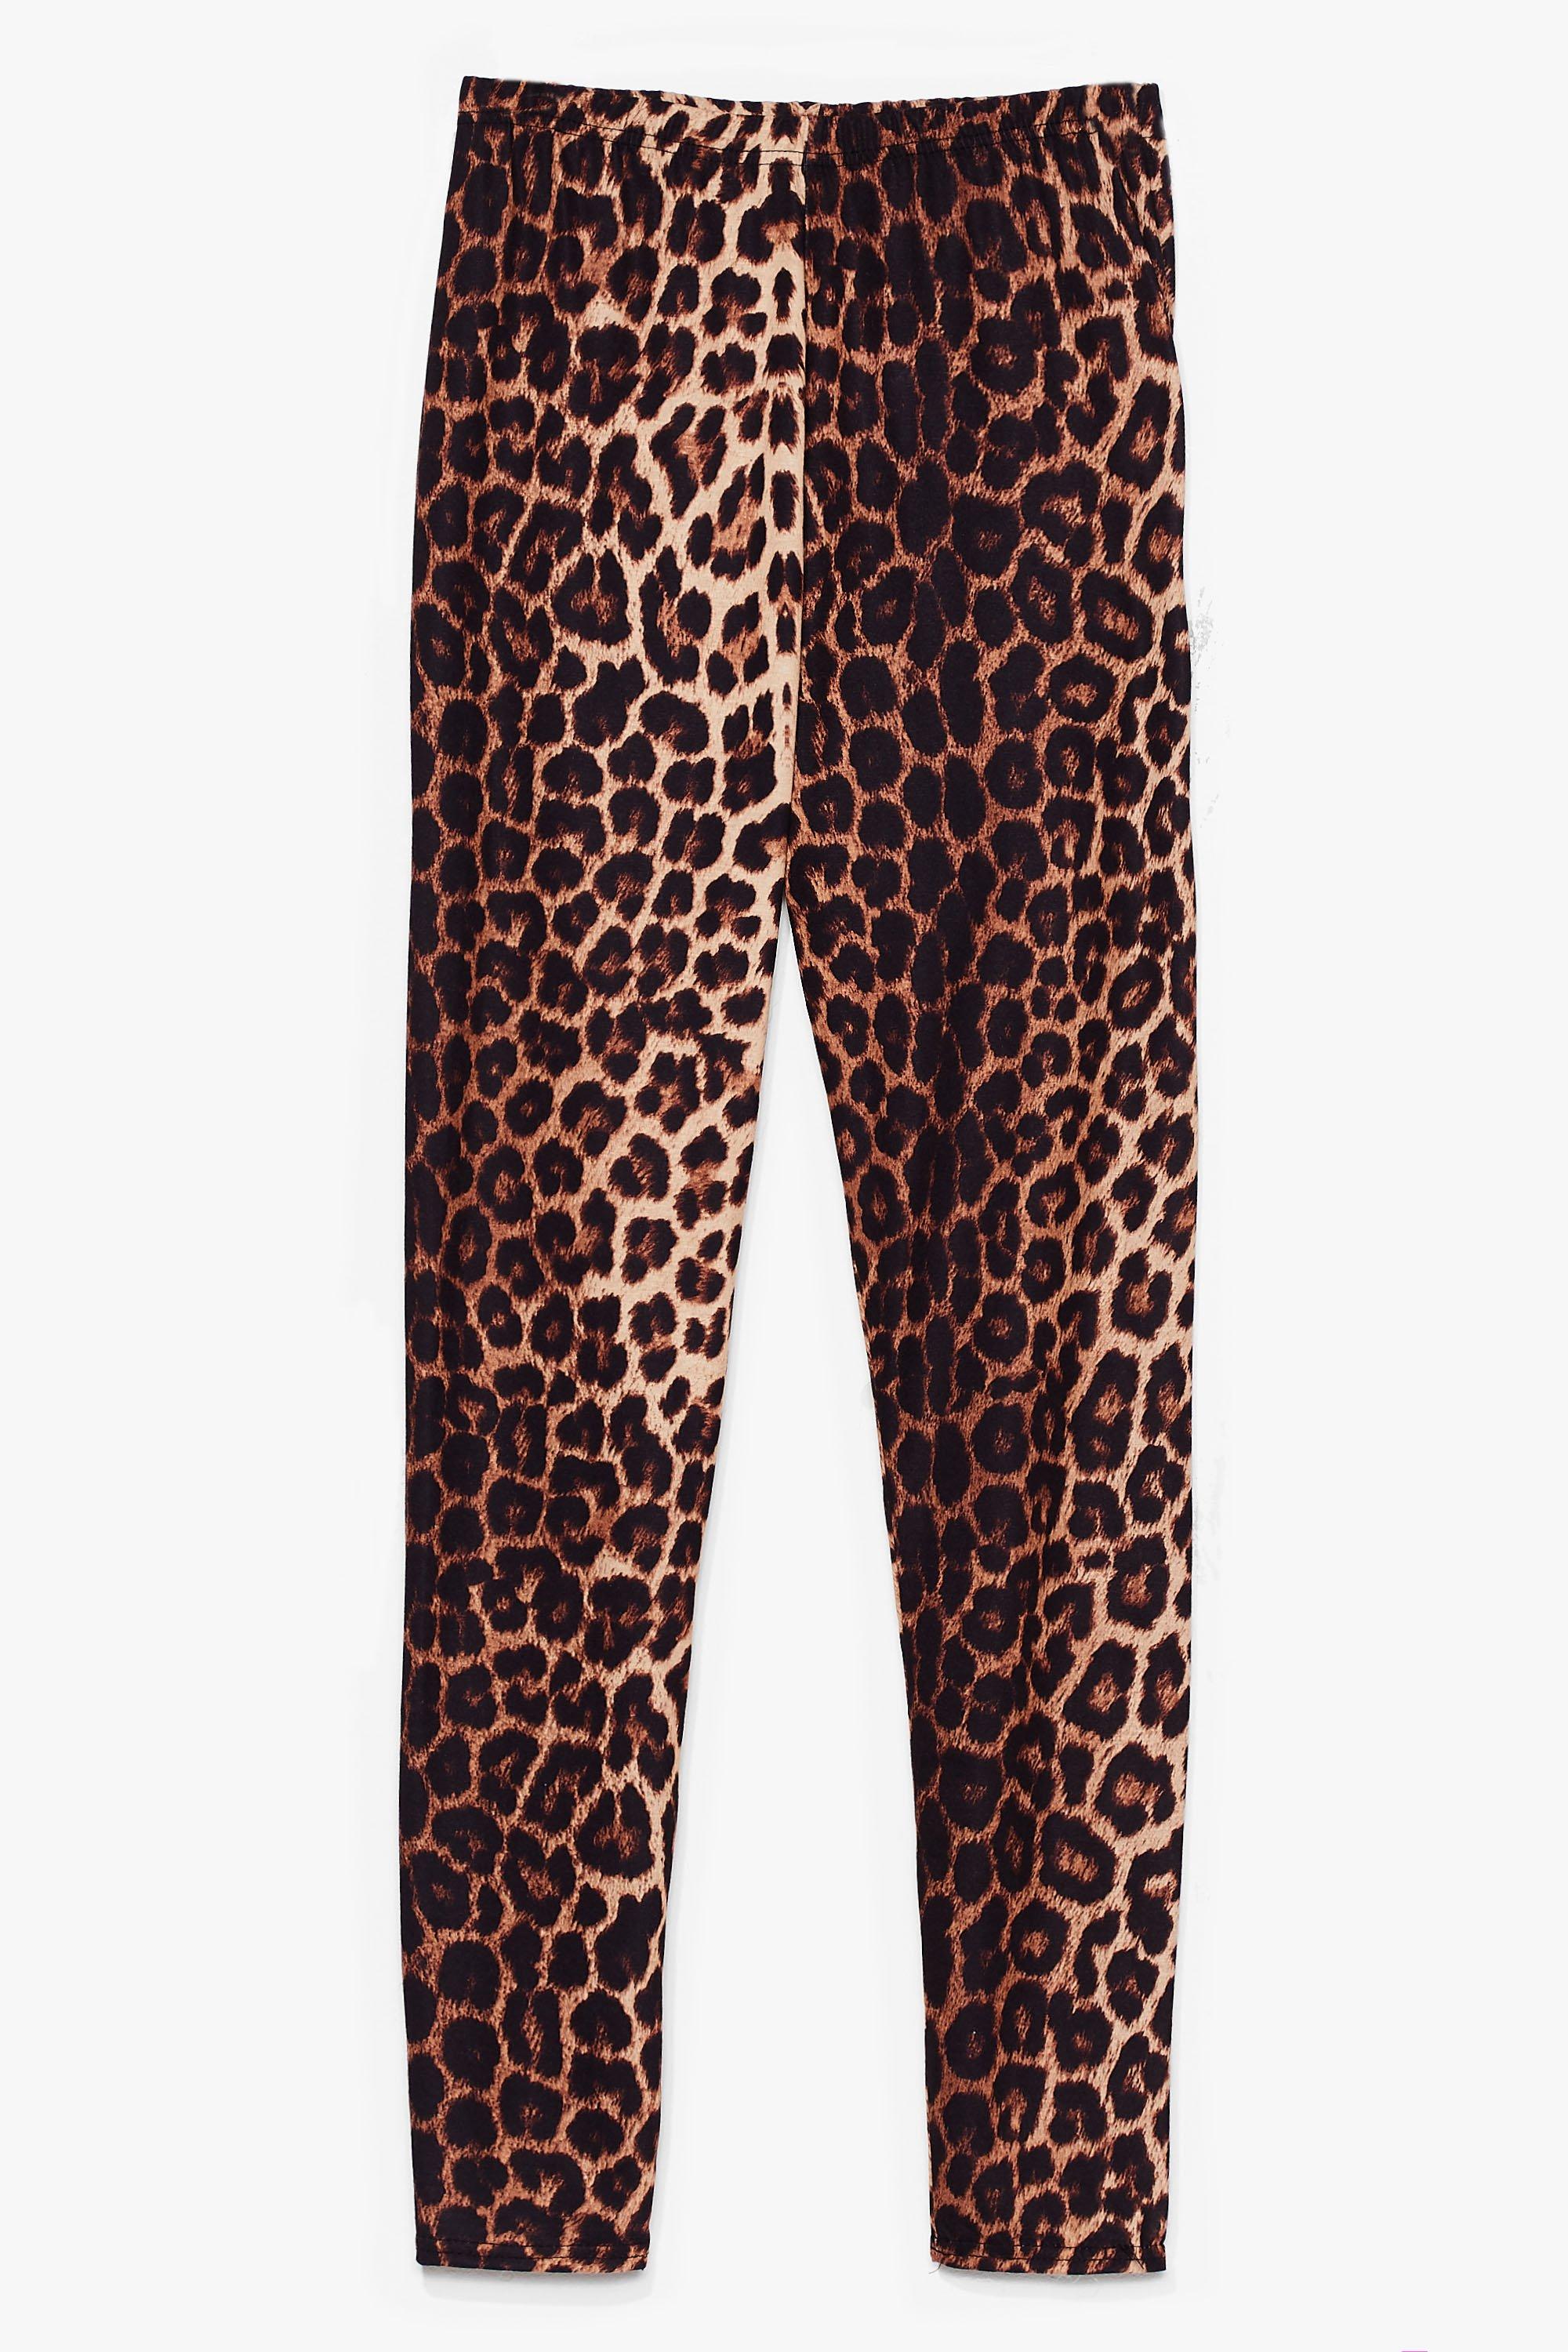 high waisted leopard leggings